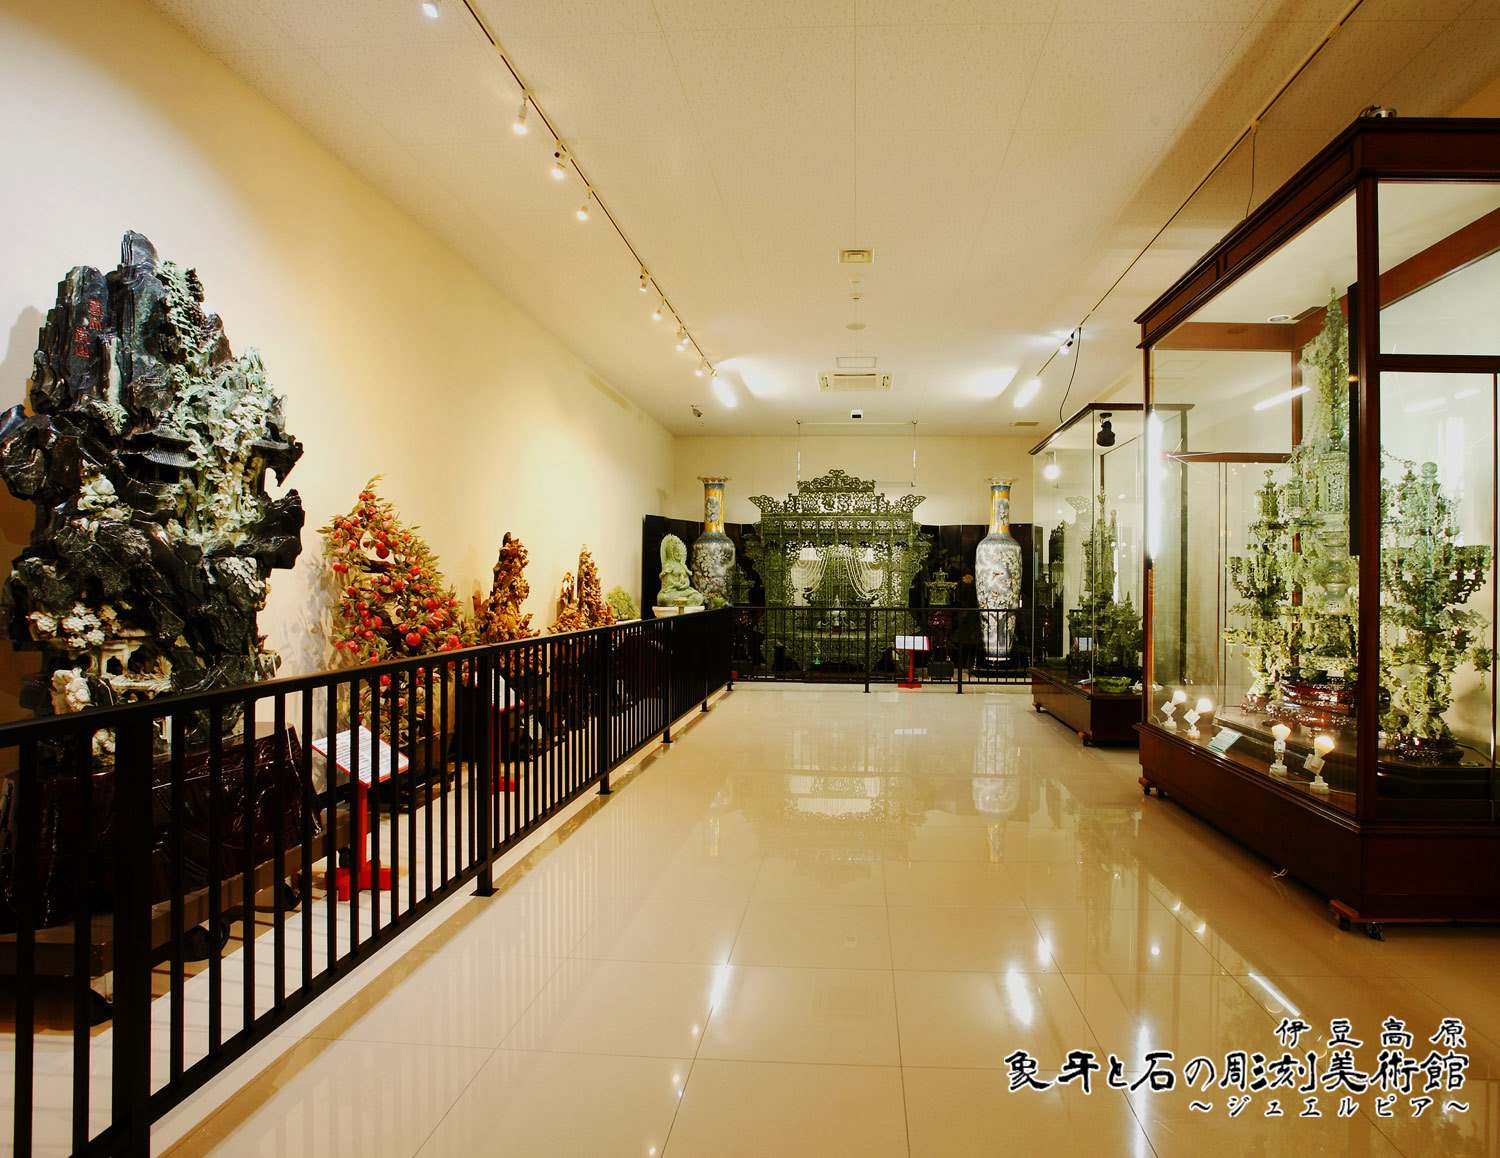 Jade sculpture Exhibition Room